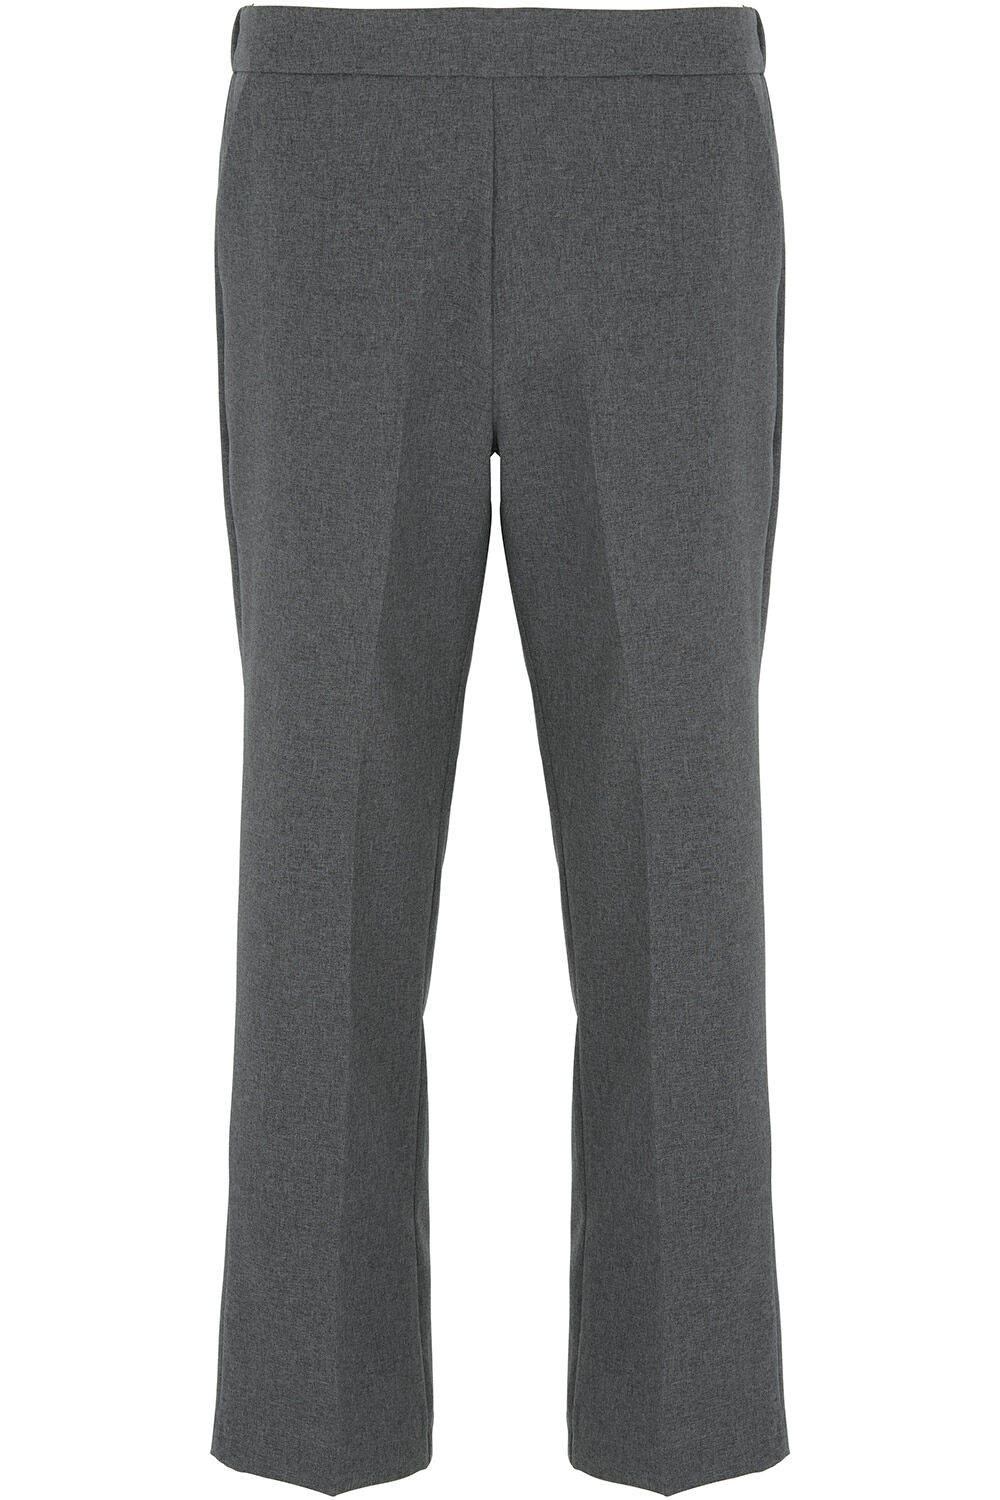 Bonmarche Plain Straight Leg Pull On Trousers - Grey, Size: 14